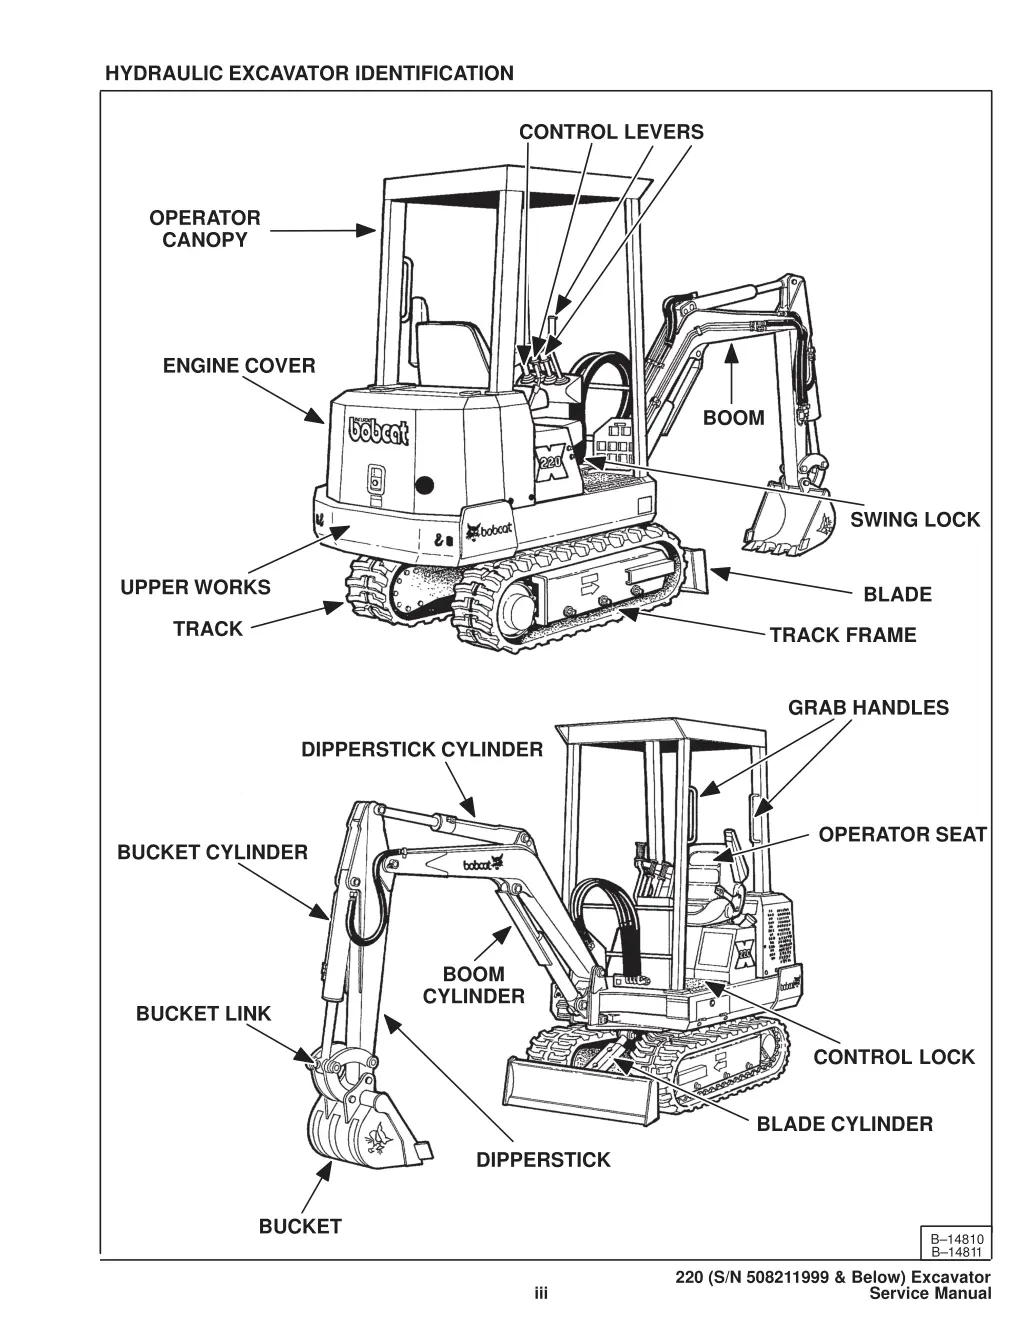 hydraulic excavator identification